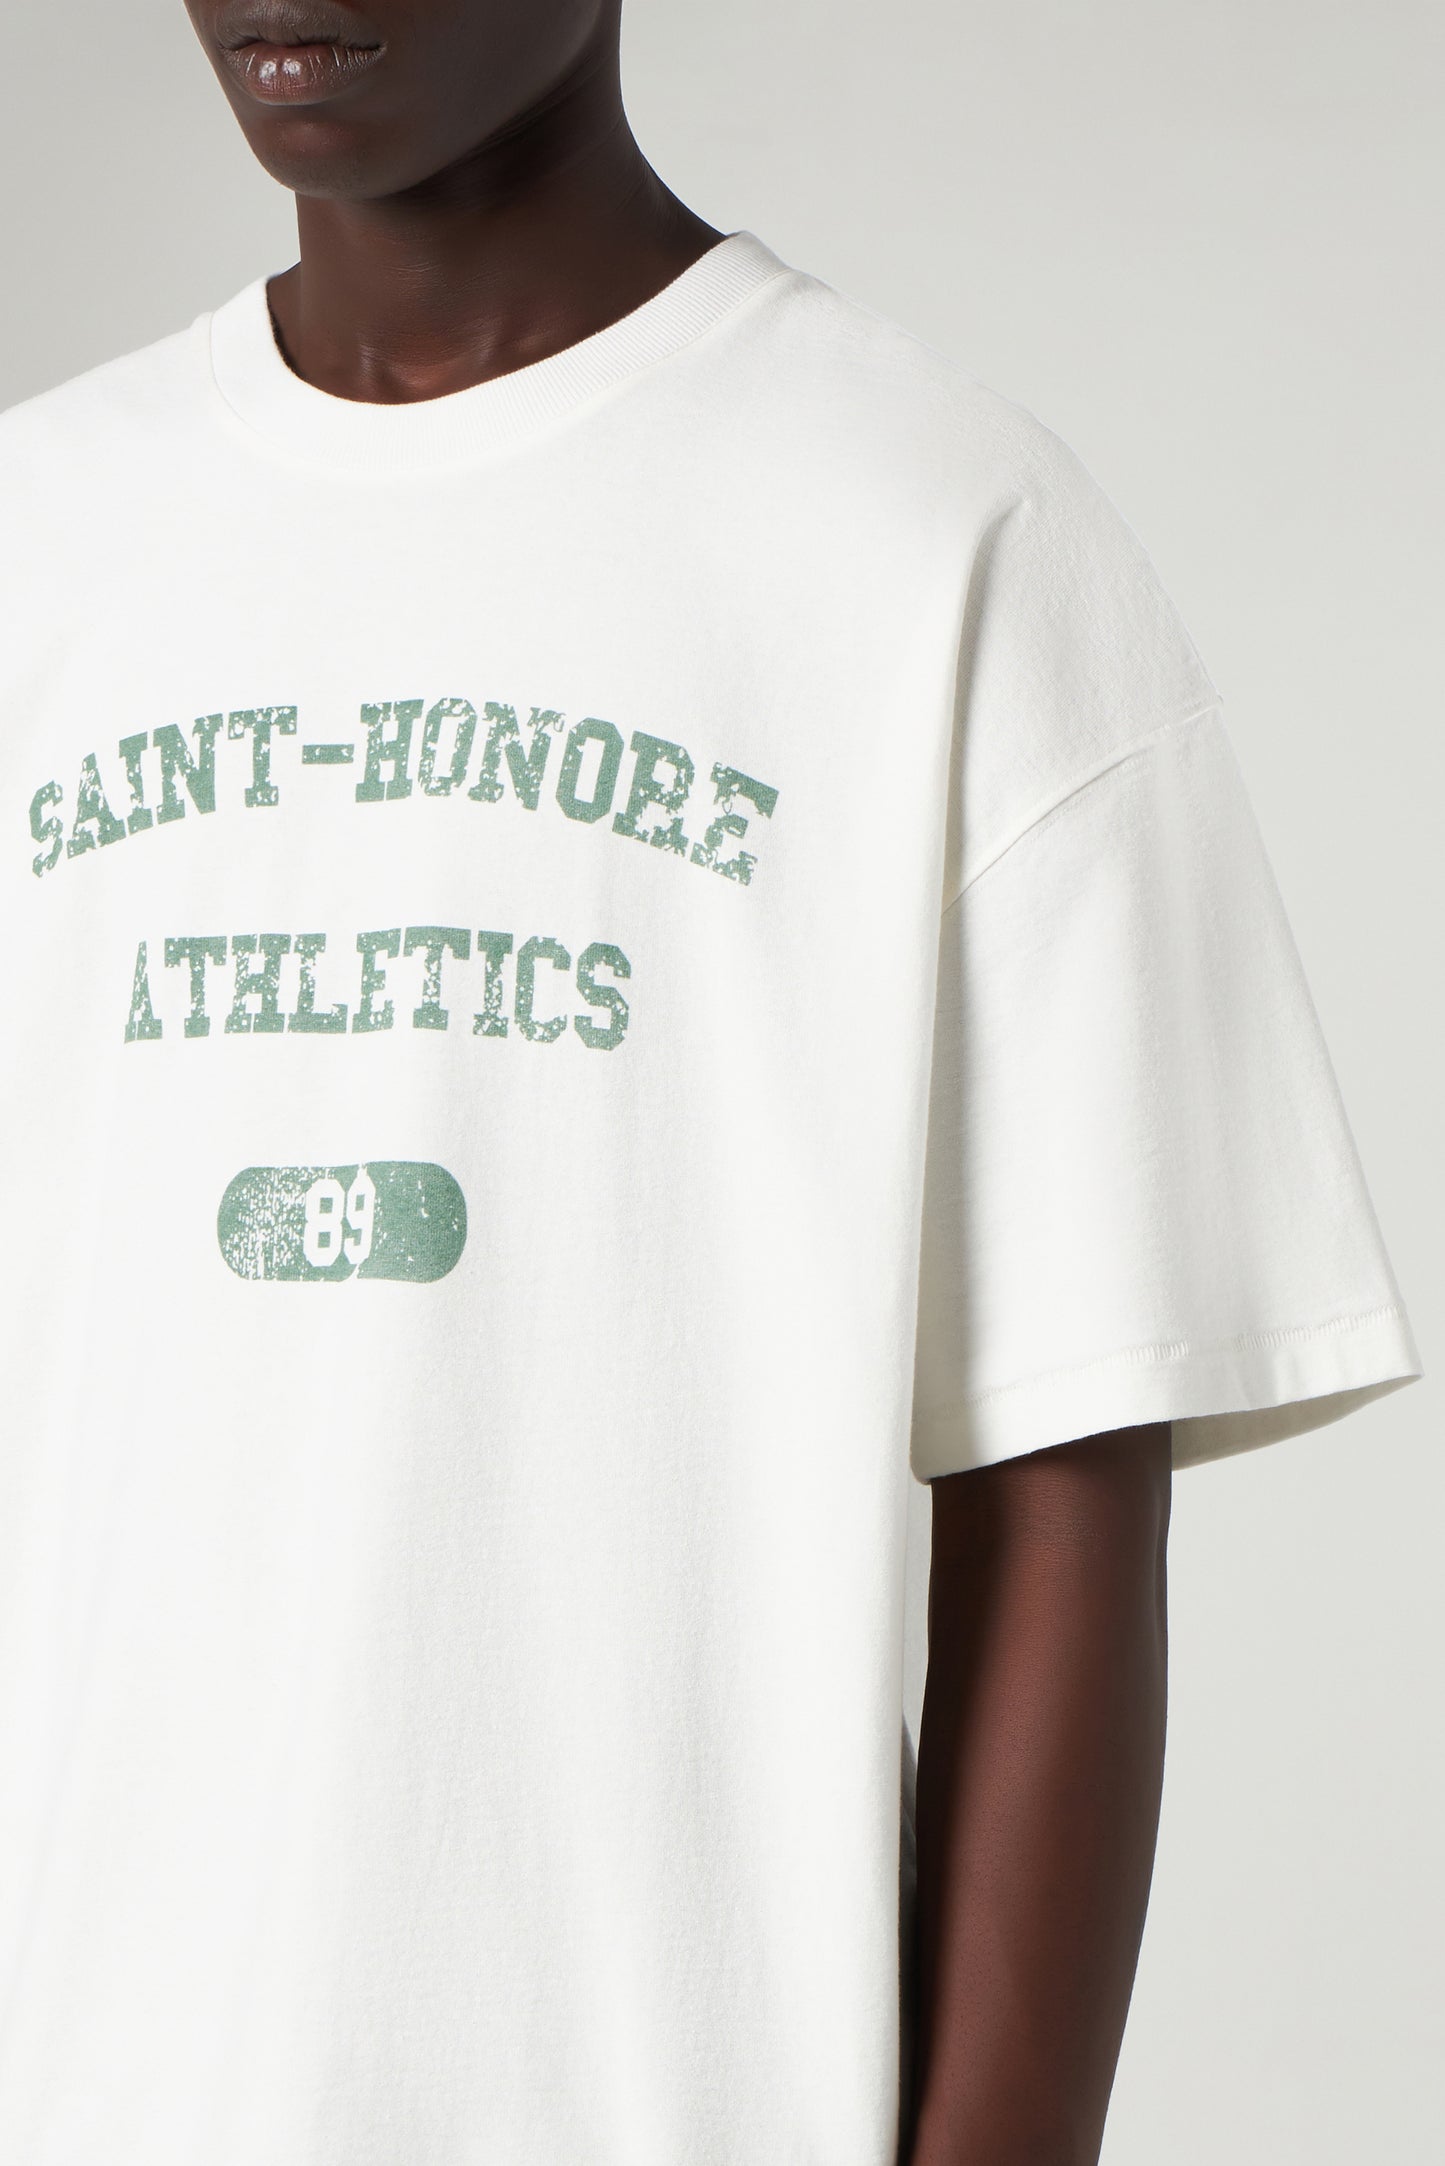 Man's Saint Honore Athletics T-Shirt